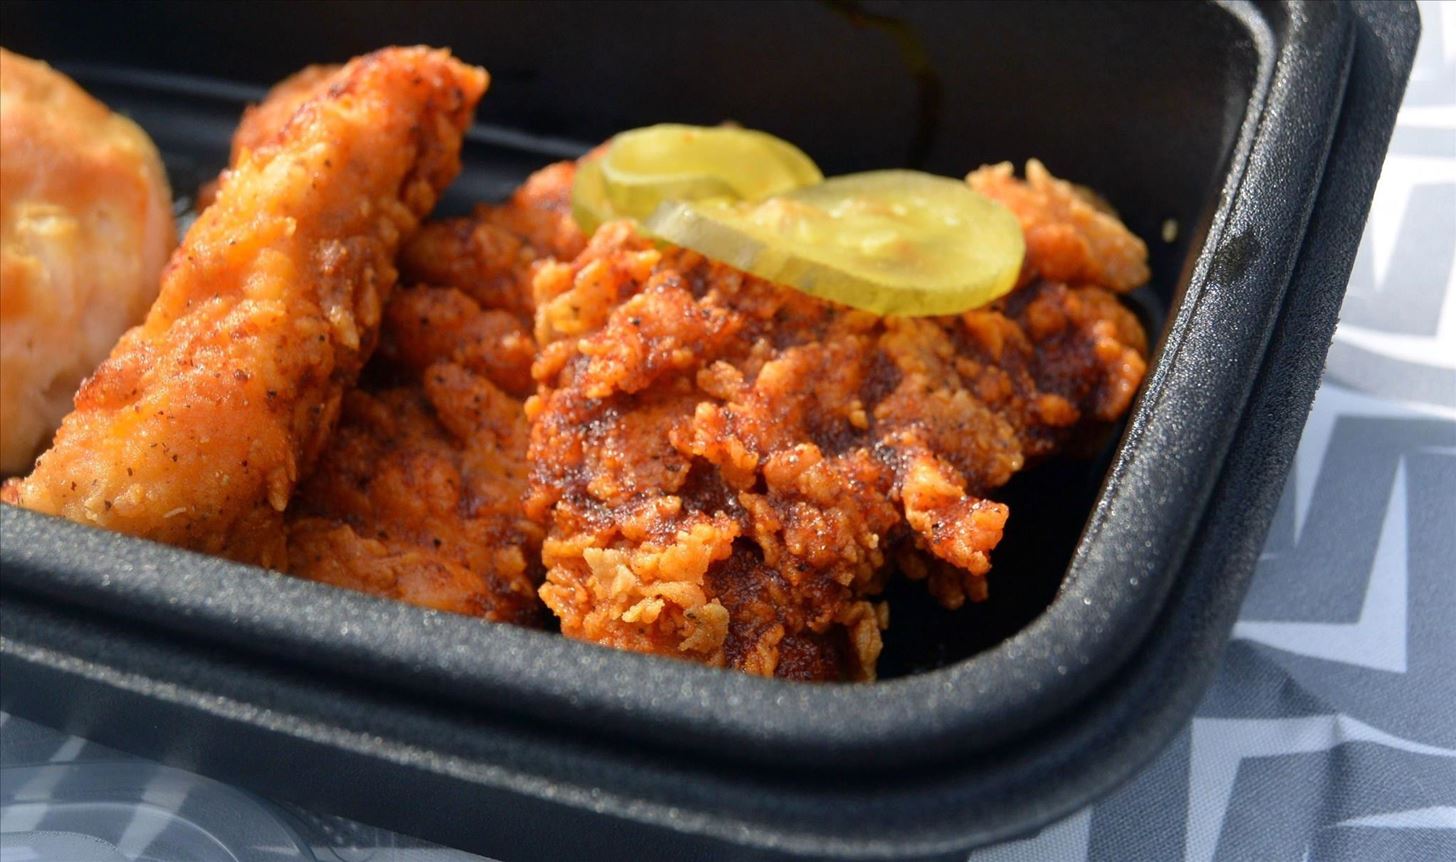 How to Clone KFC's Nashville Hot Chicken